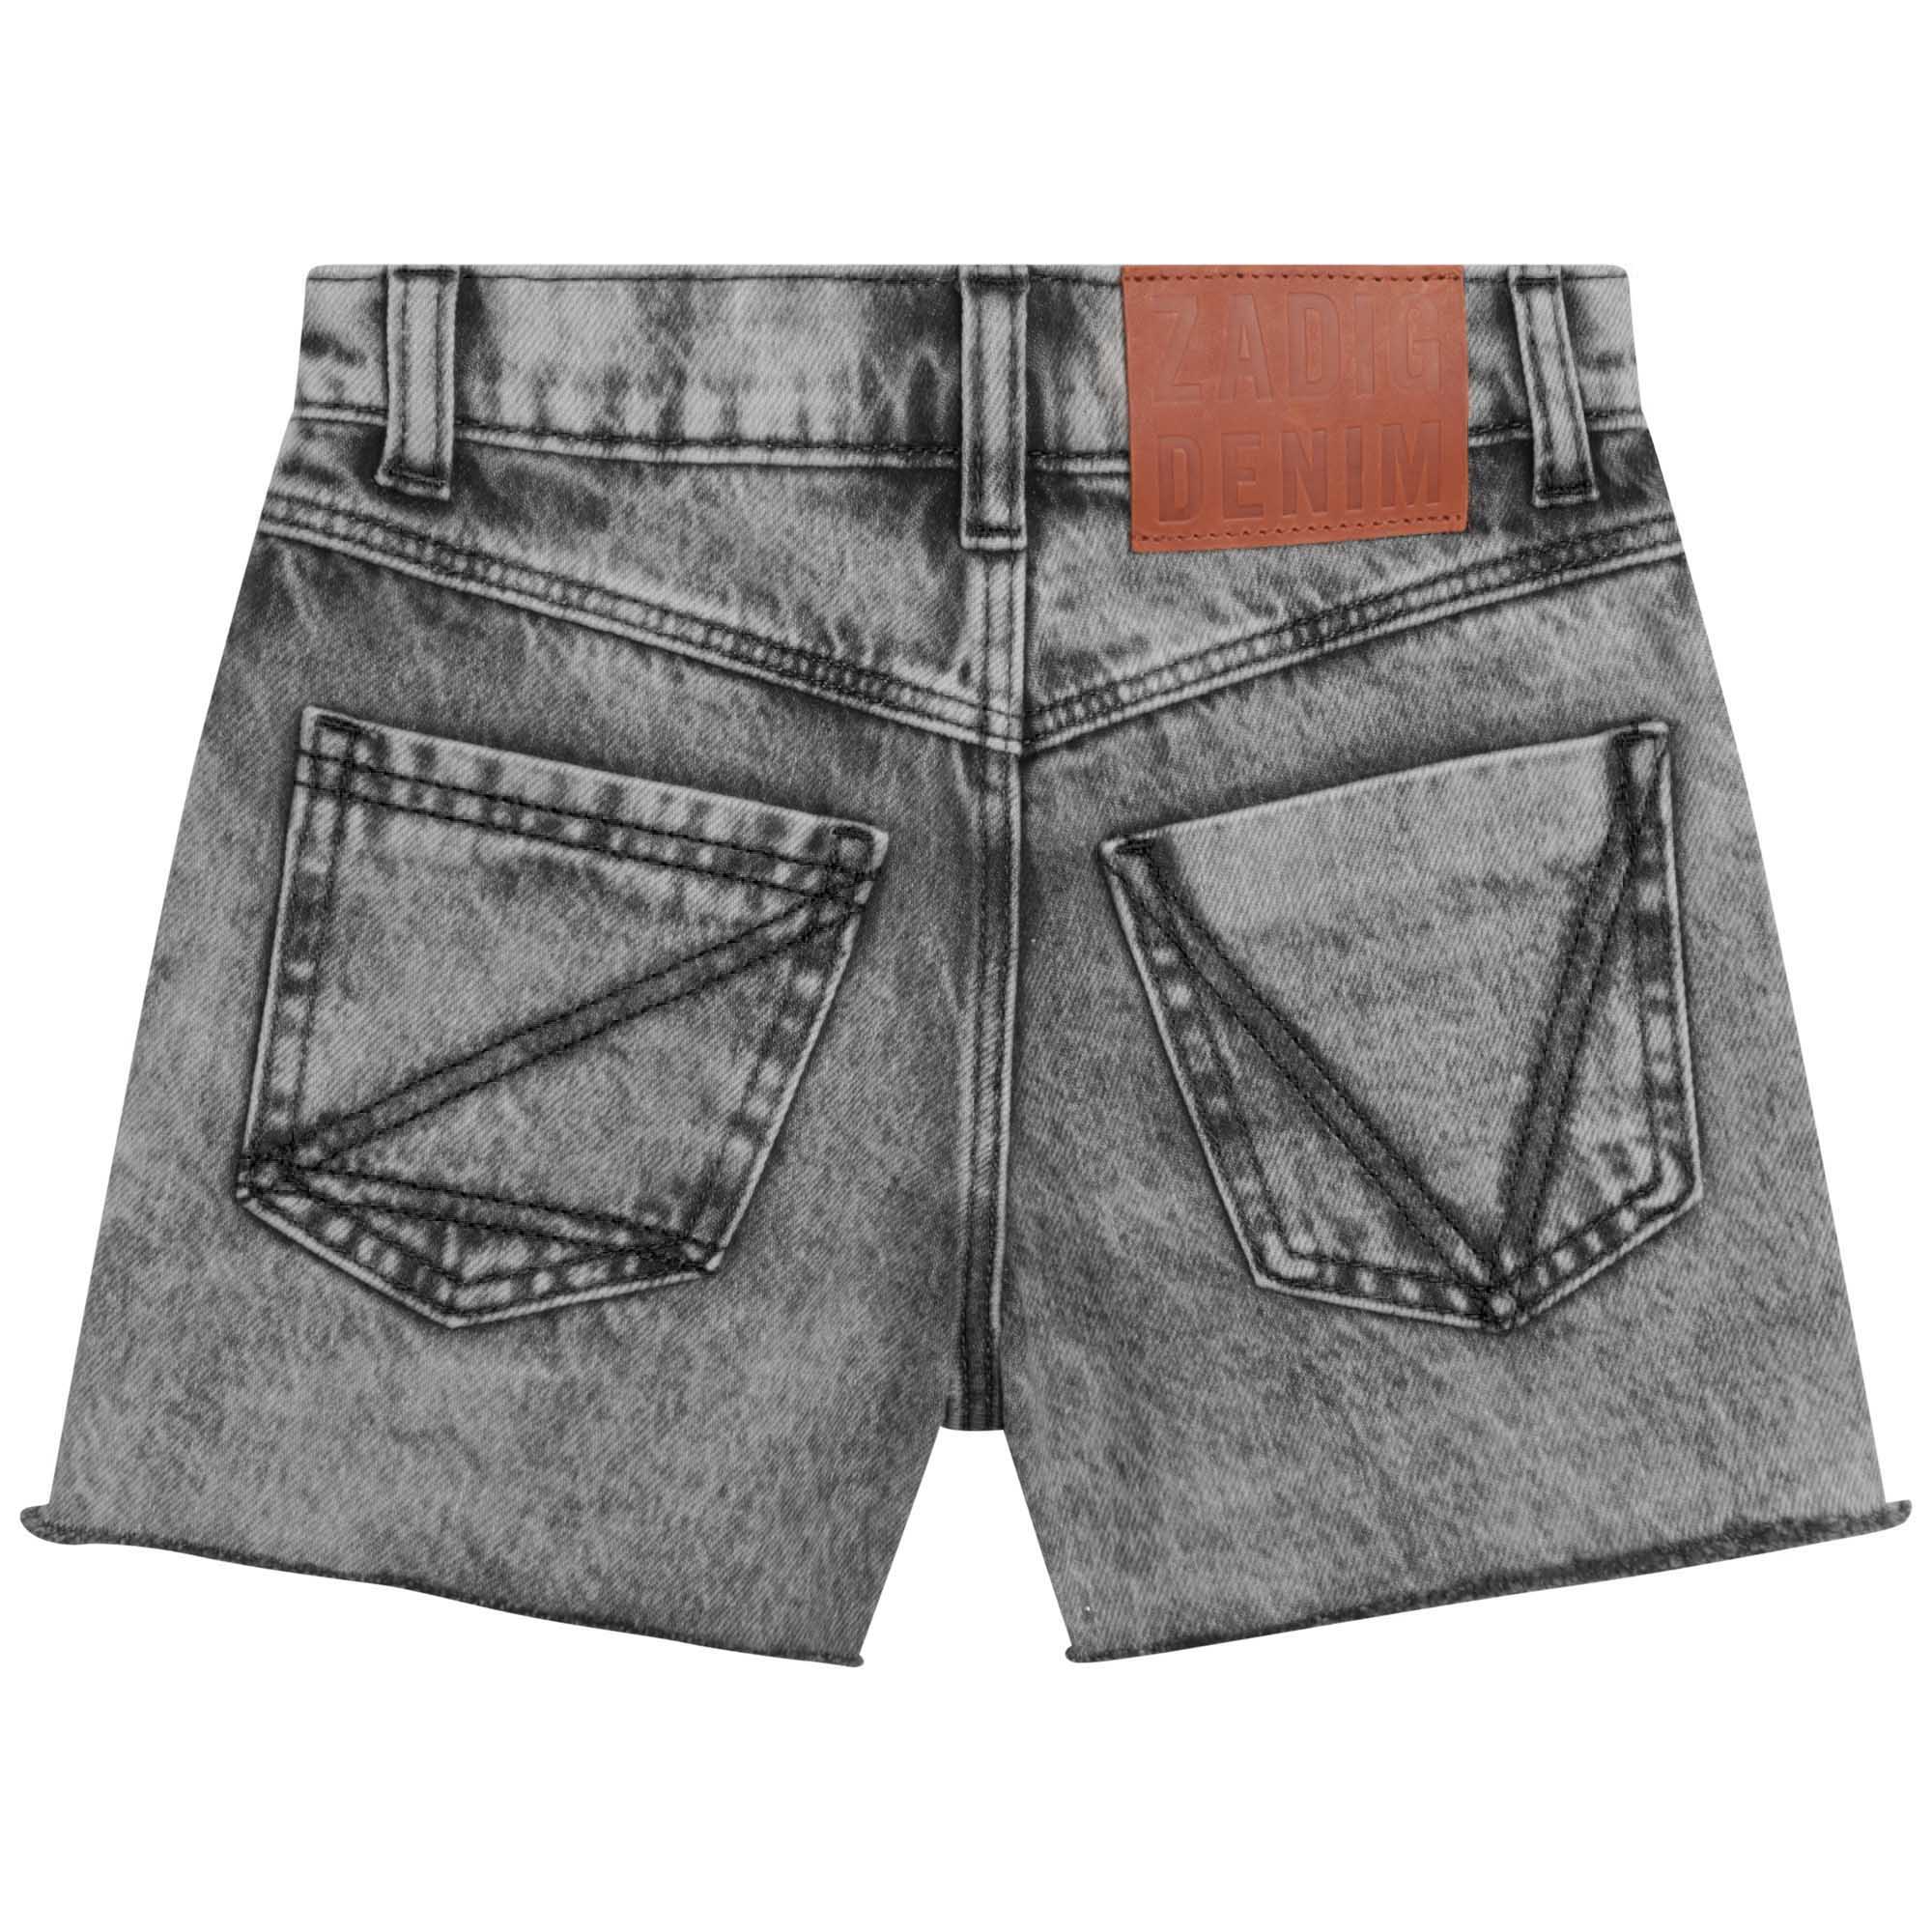 Adjustable cotton denim shorts ZADIG & VOLTAIRE for GIRL